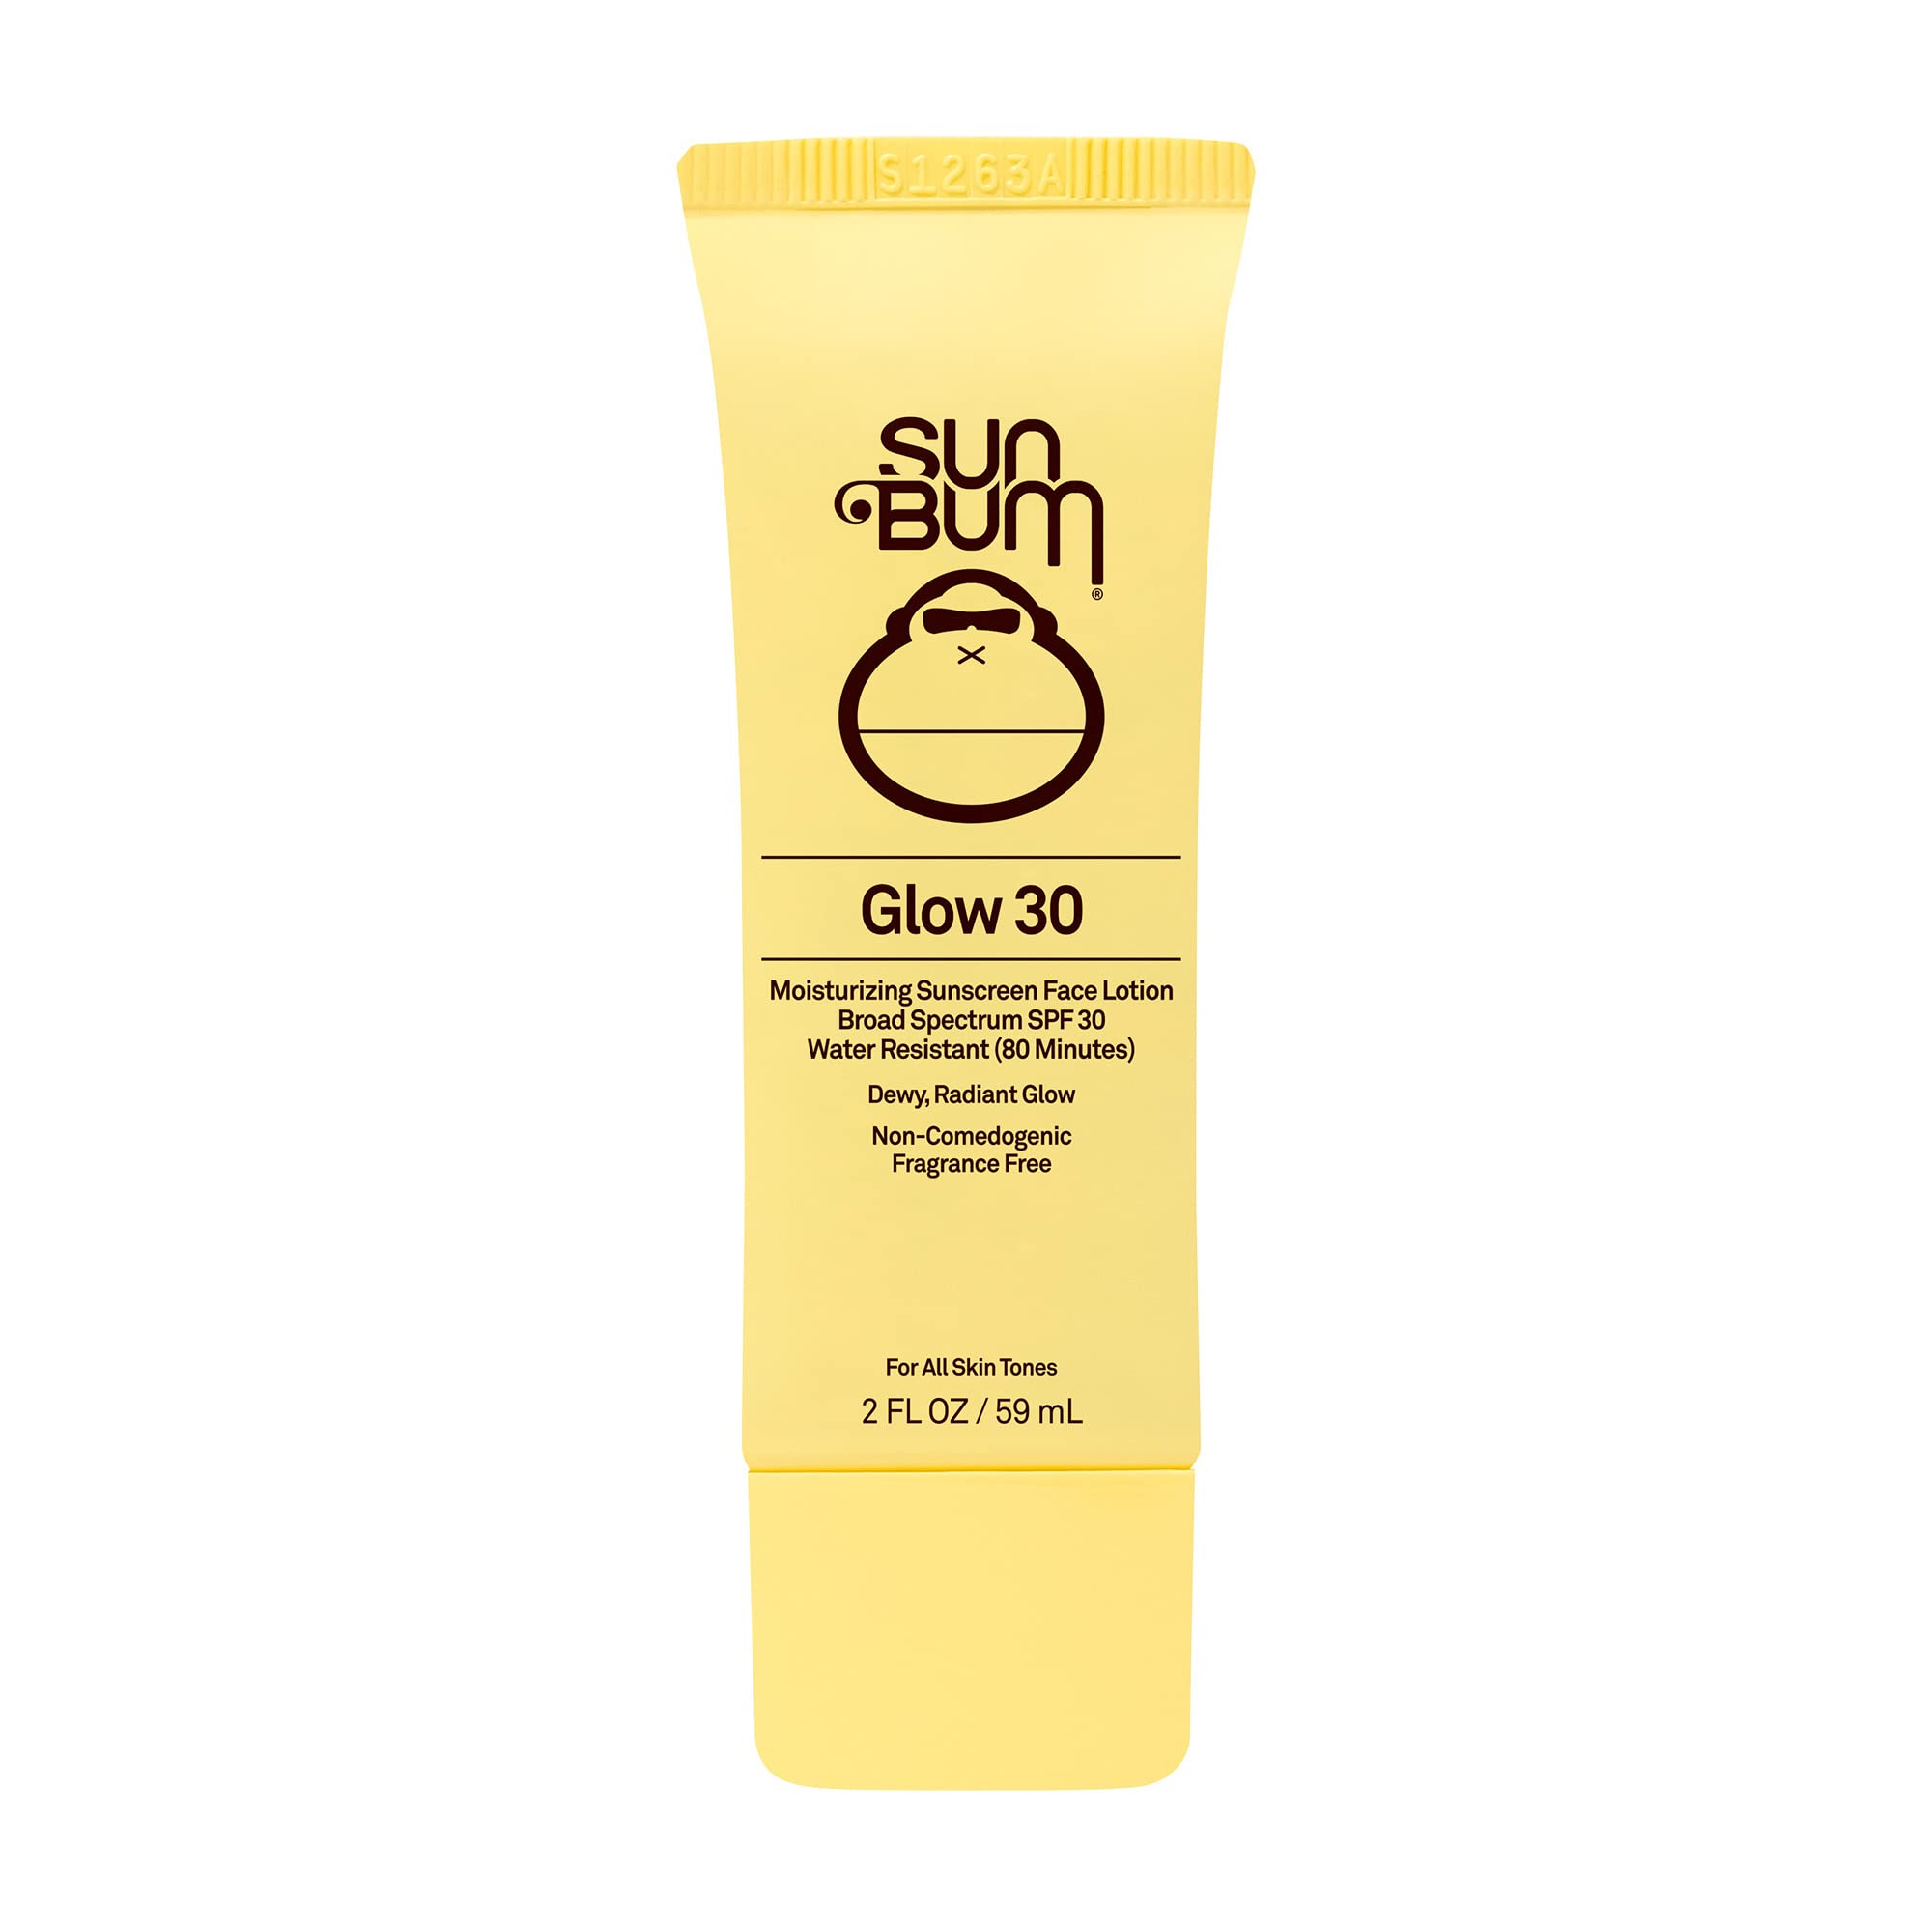 Sun Bum Original SPF 30 Glow Sunscreen Face Lotion | Vegan and Hawaii 104 Reef Act Compliant (Octinoxate & Oxybenzone Free) Broad Spectrum Moisturizing UVA/UVB Sunscreen Lotion with Vitamin E | 2 oz